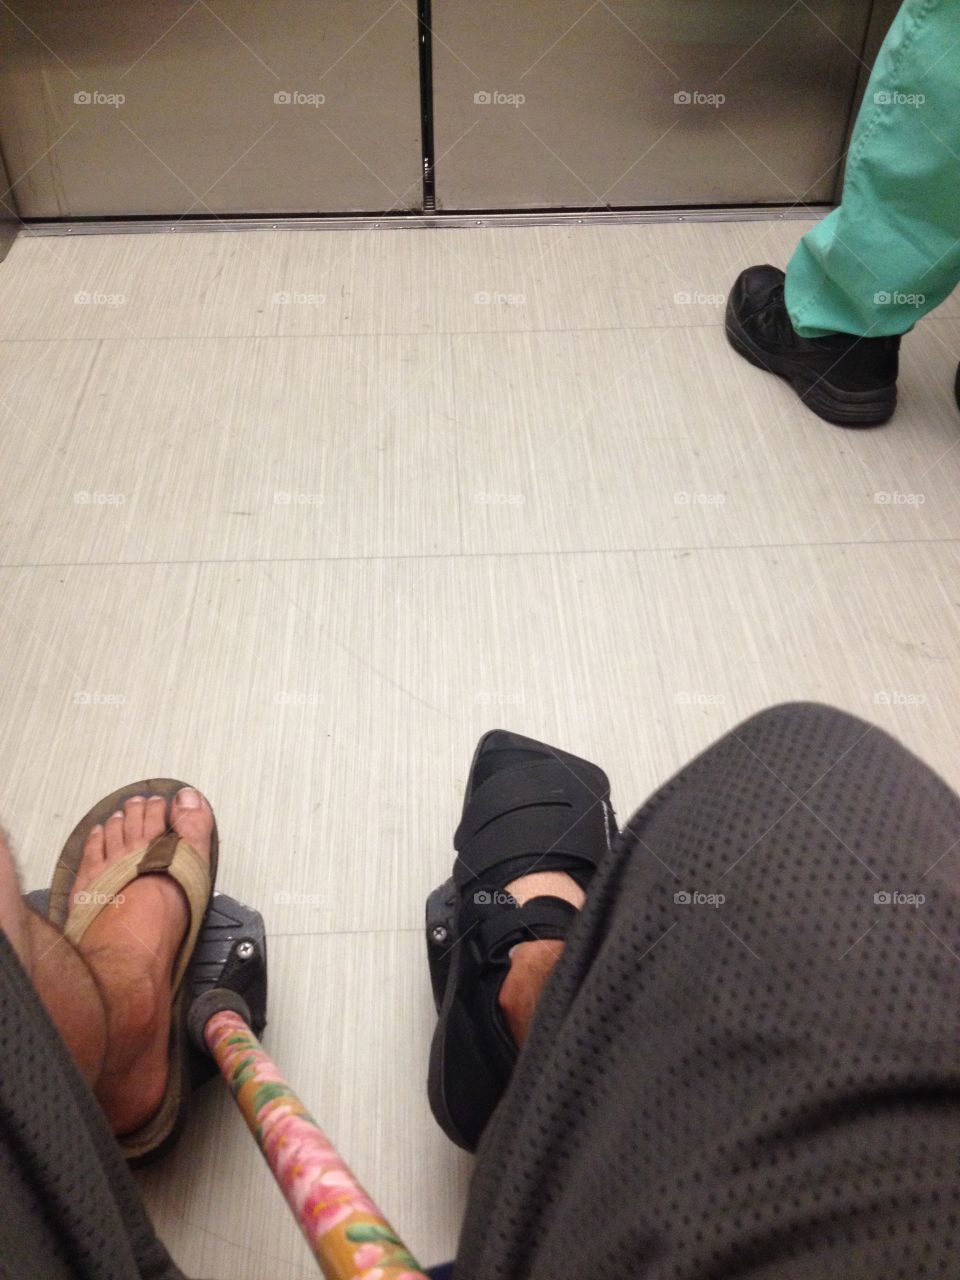 Post op visit to VA after foot surgery 